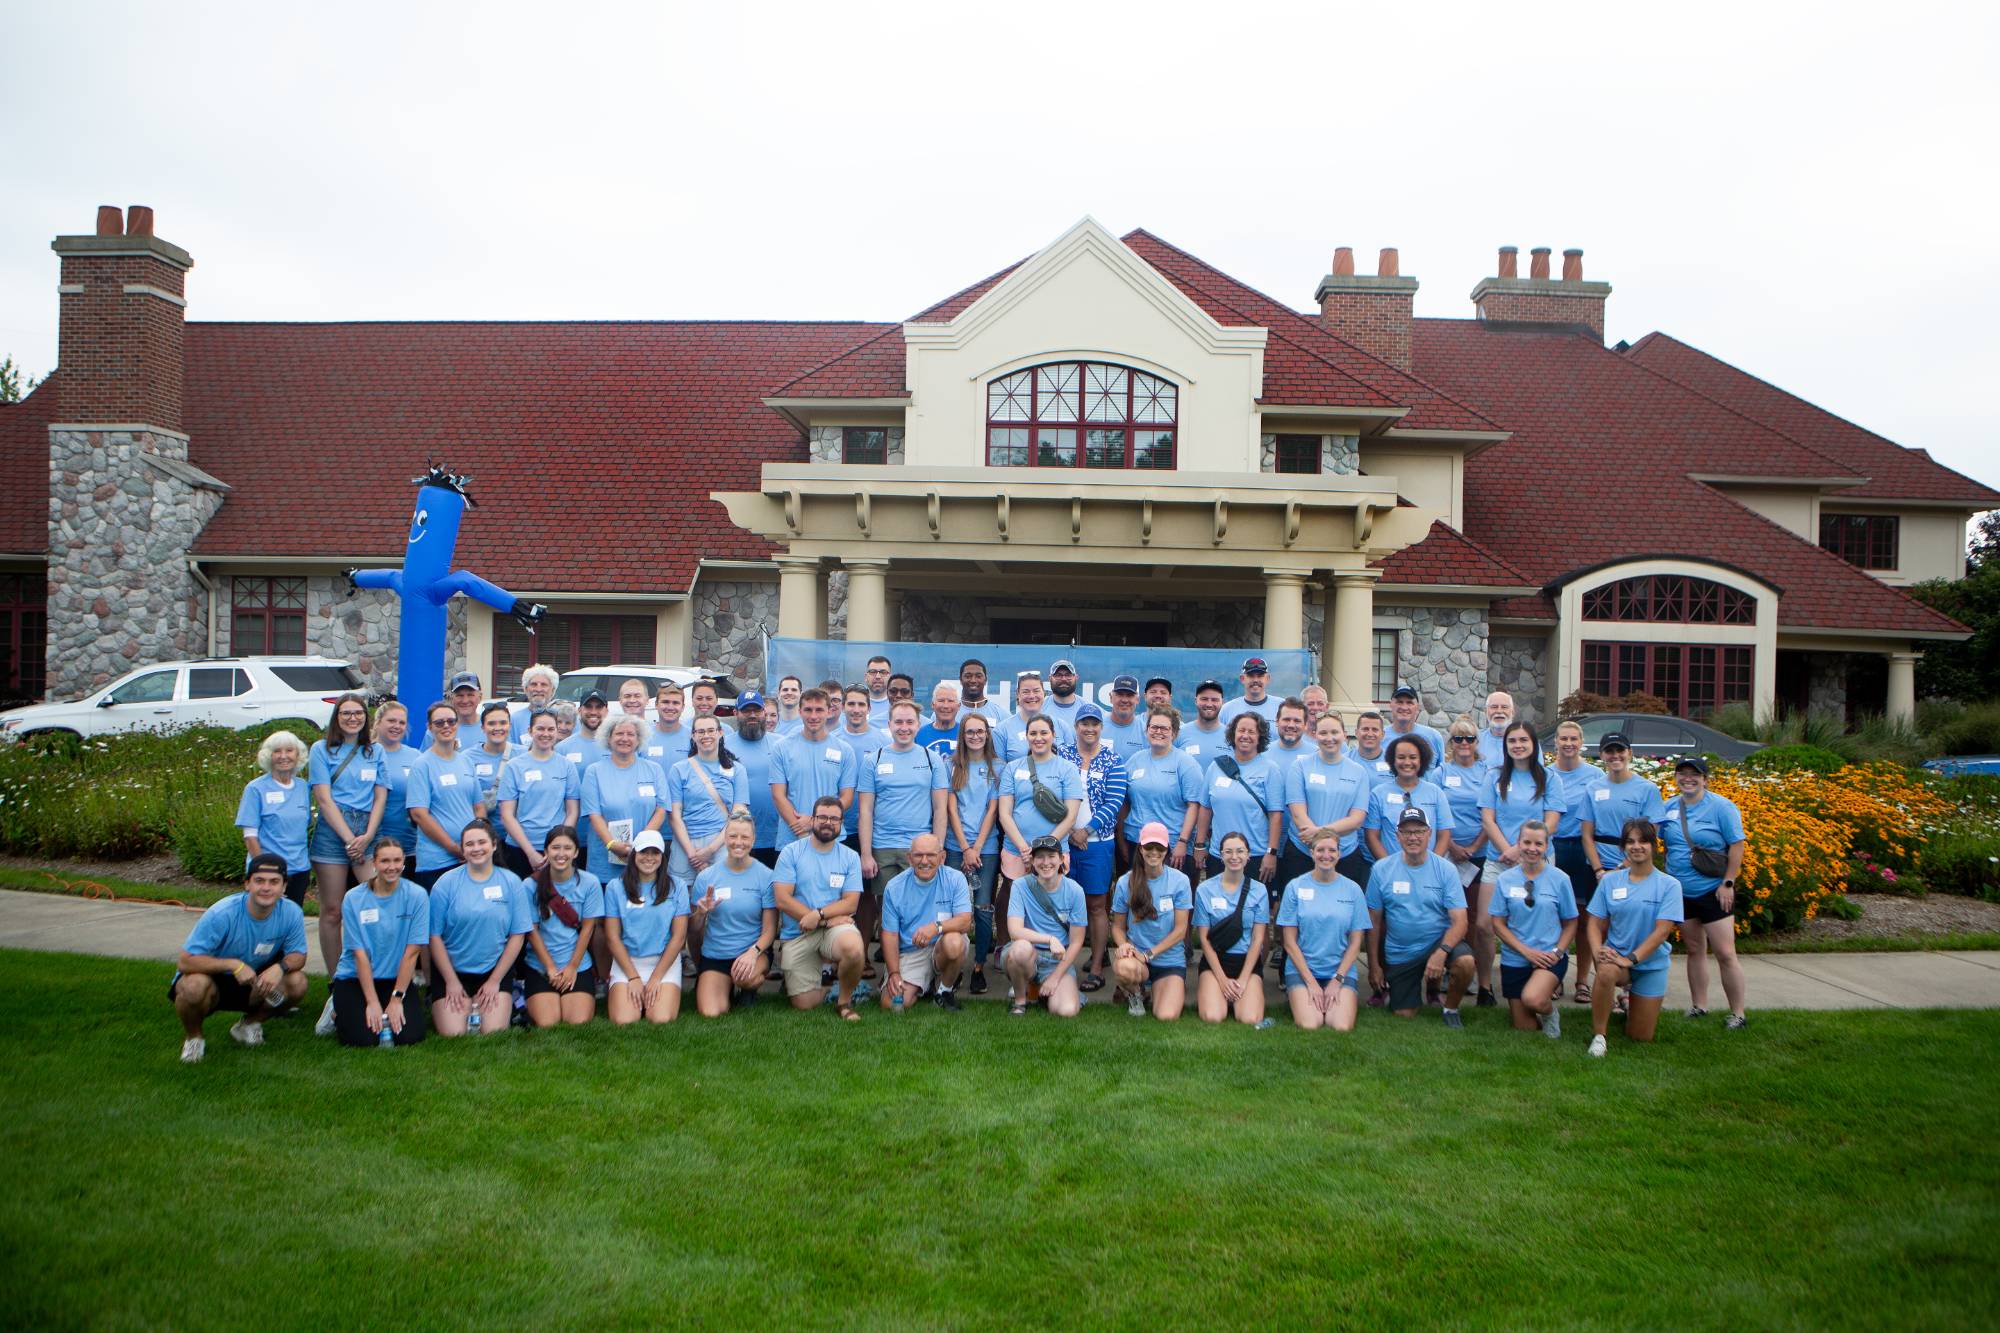 2023 GVSU move-in alumni volunteers pose for a group photo outside of alumni house